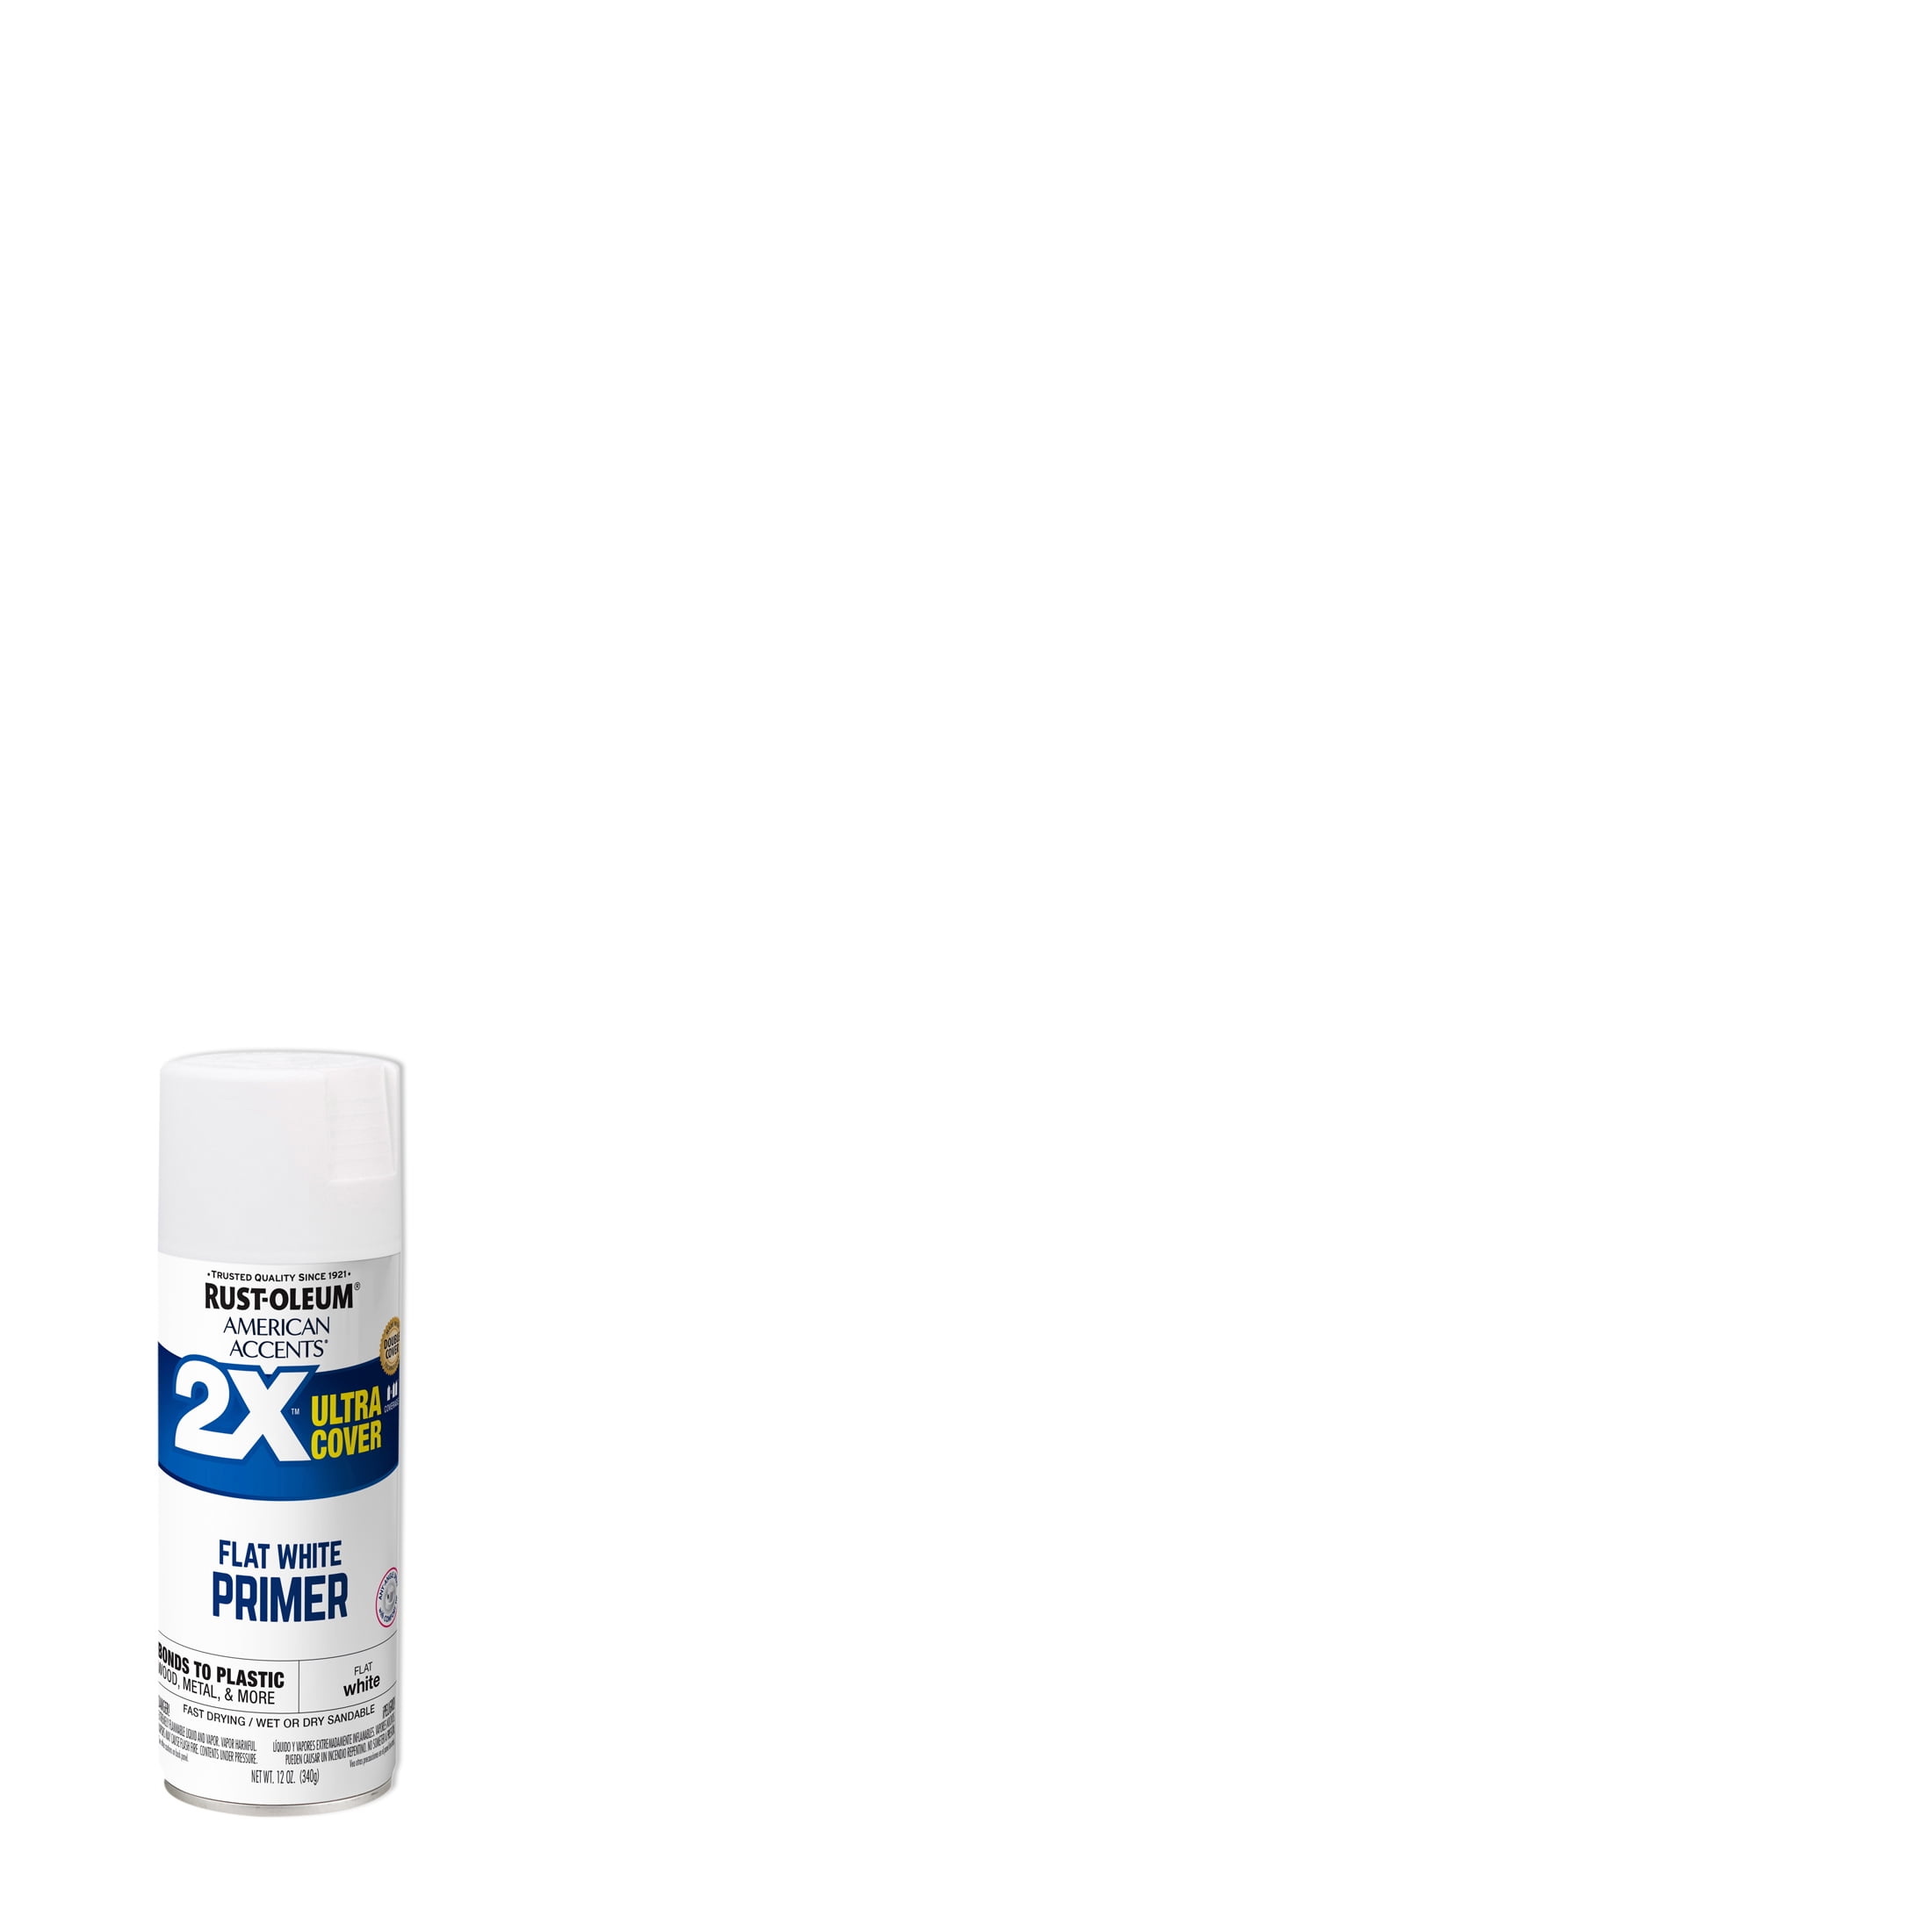 Rust-Oleum® Industrial Spray Primer - Gray S-21953 - Uline